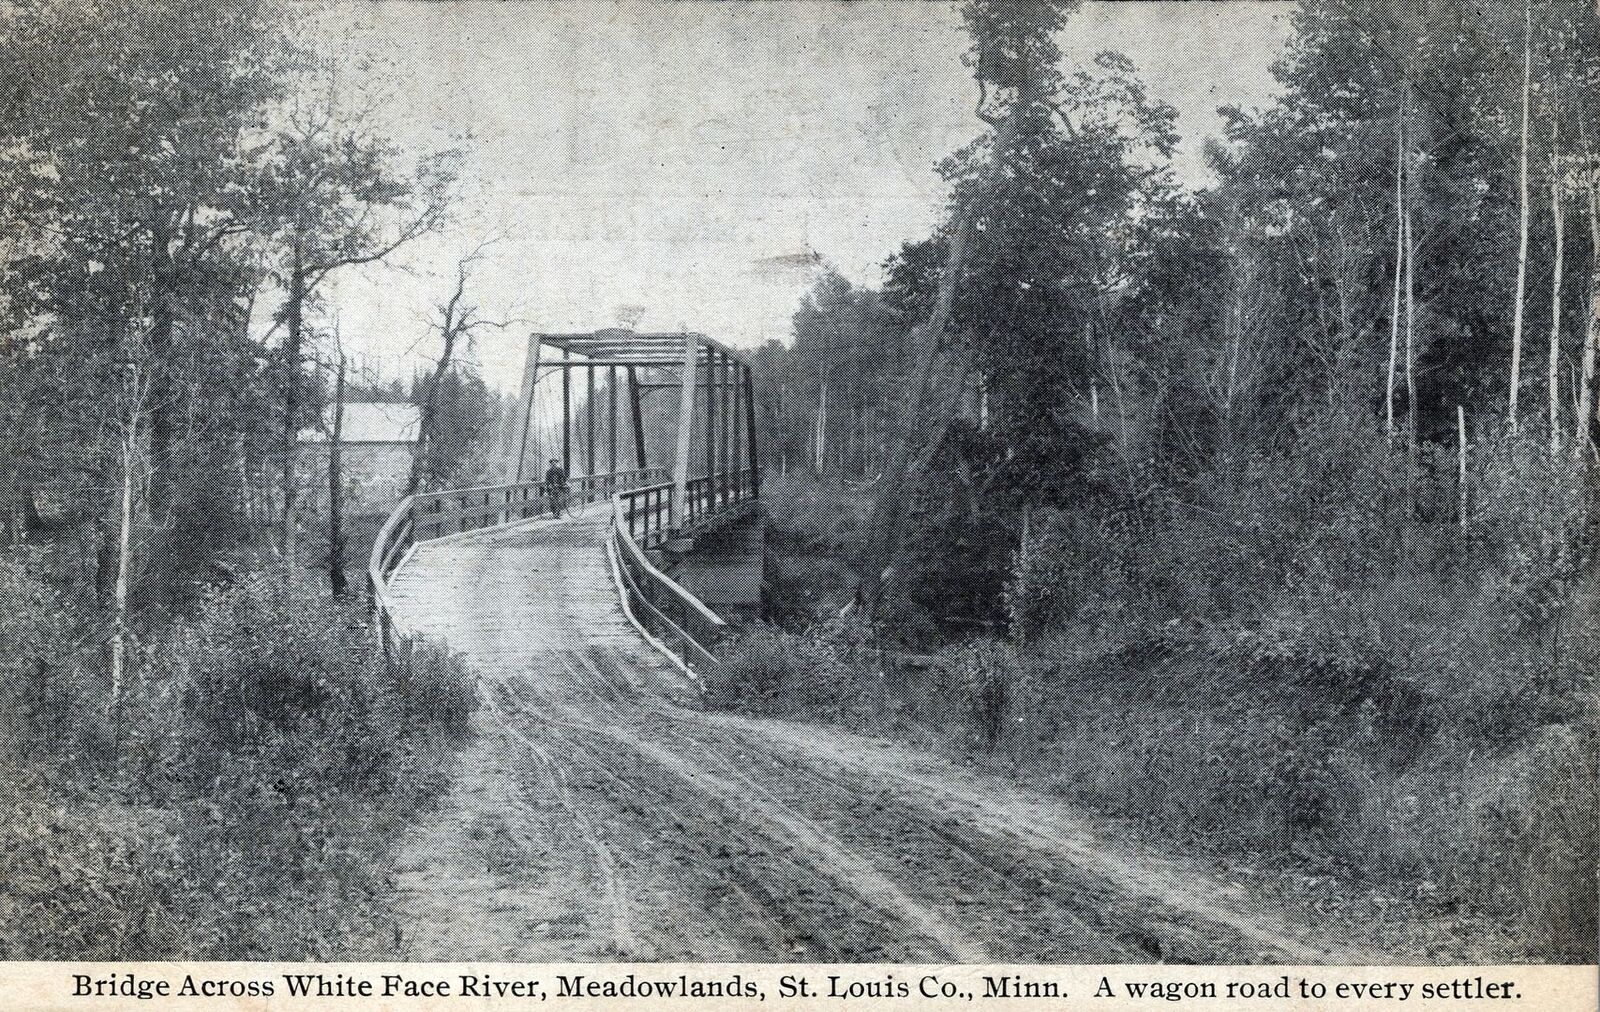 MEADOWLANDS MN - Bridge Across White Face River - 1909